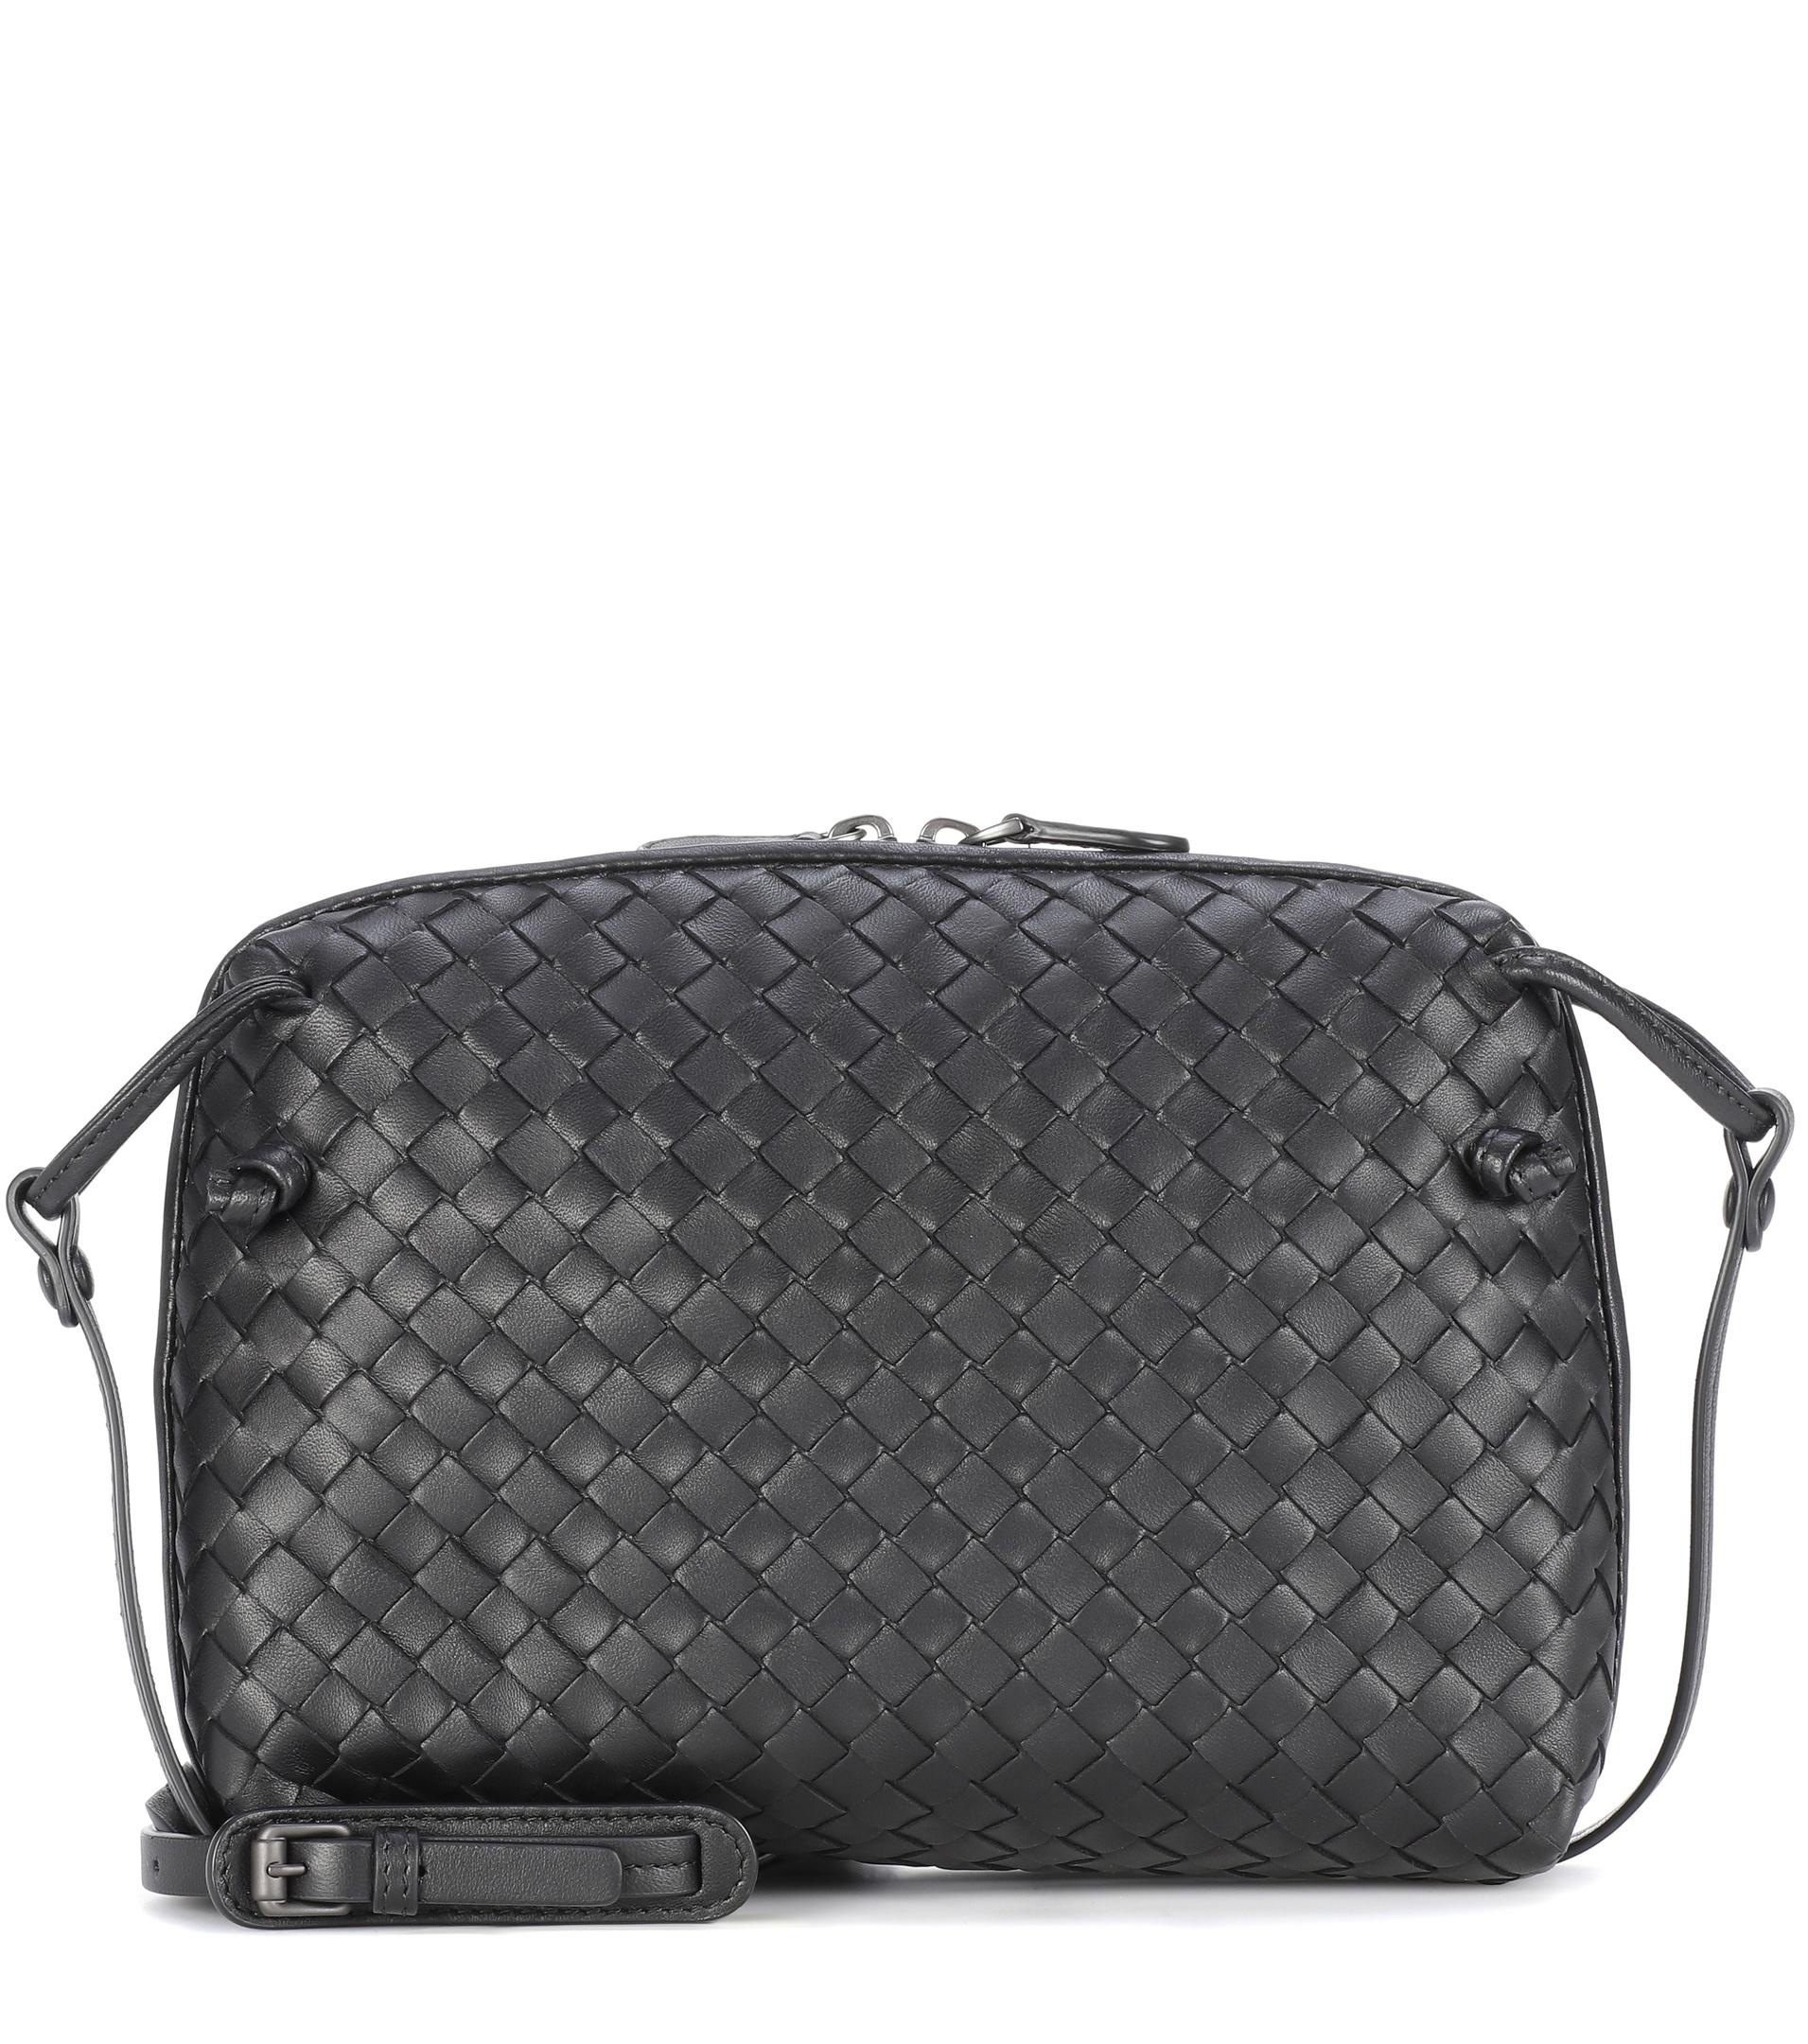 Bottega Veneta Nodini Leather Crossbody Bag in Black - Lyst